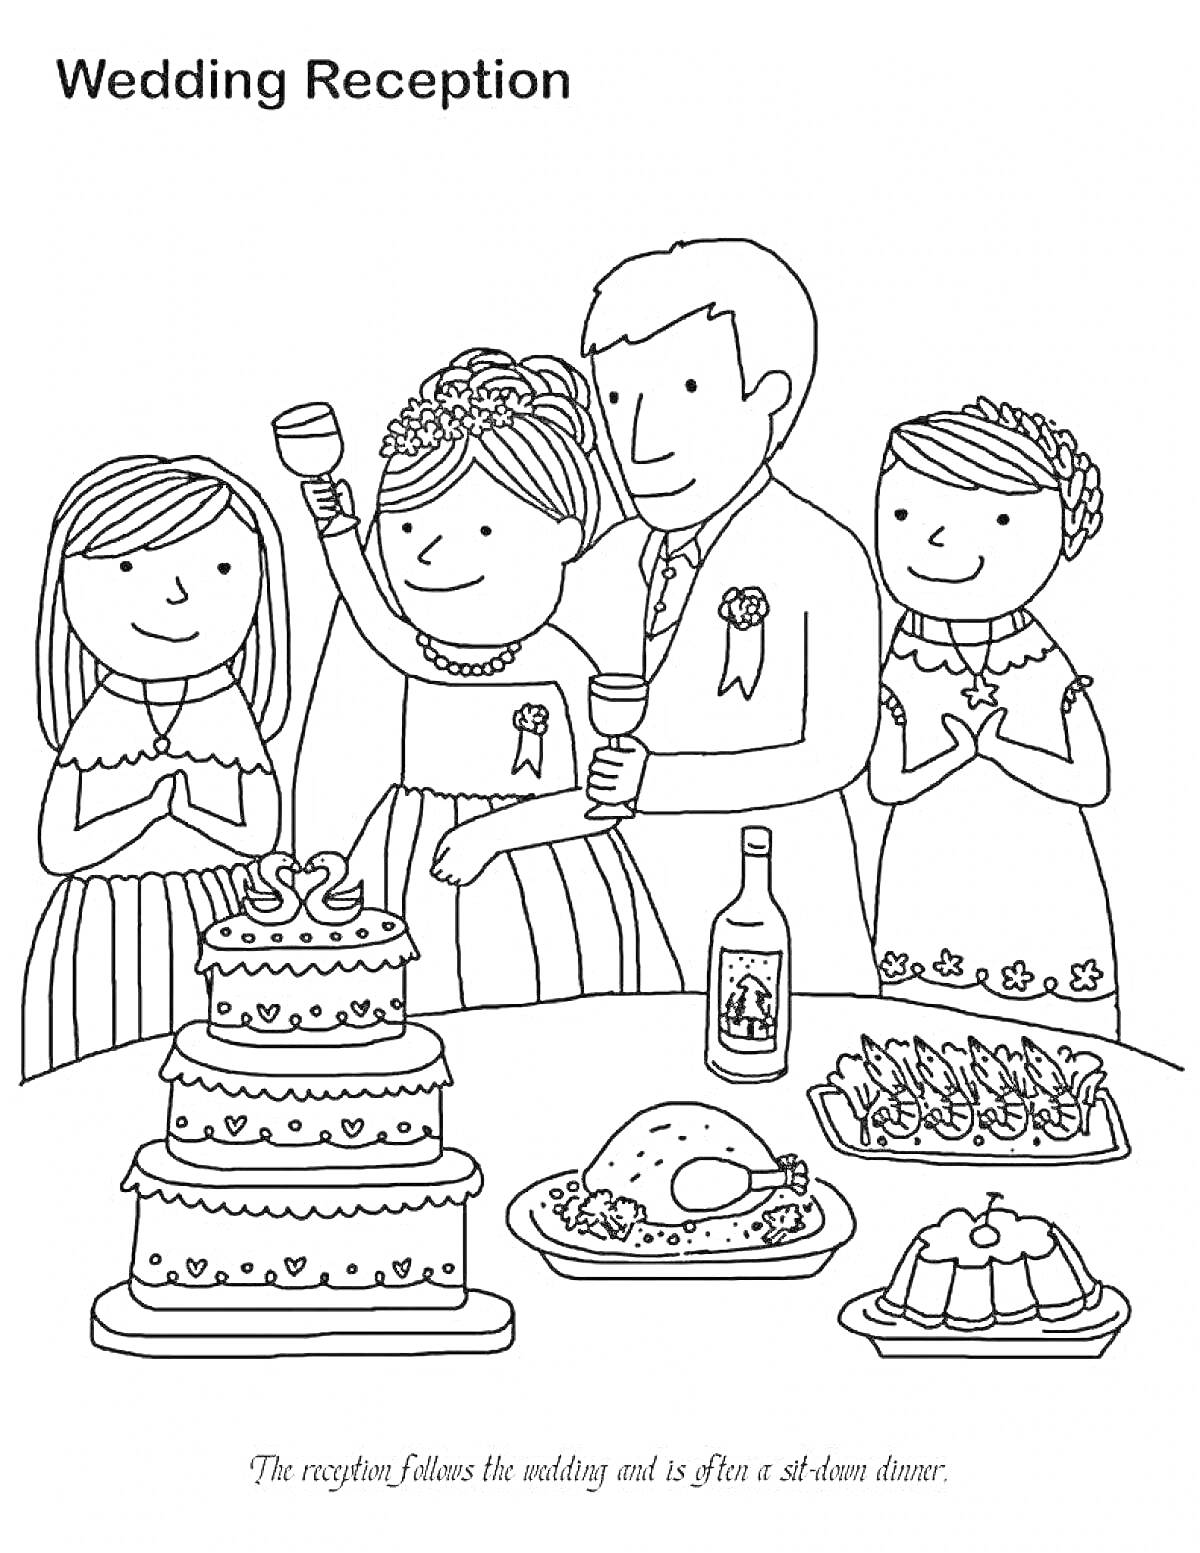 На раскраске изображено: Свадьба, Прием, Торт, Жених, Невеста, Гости, Бутылка, Еда, Закуски